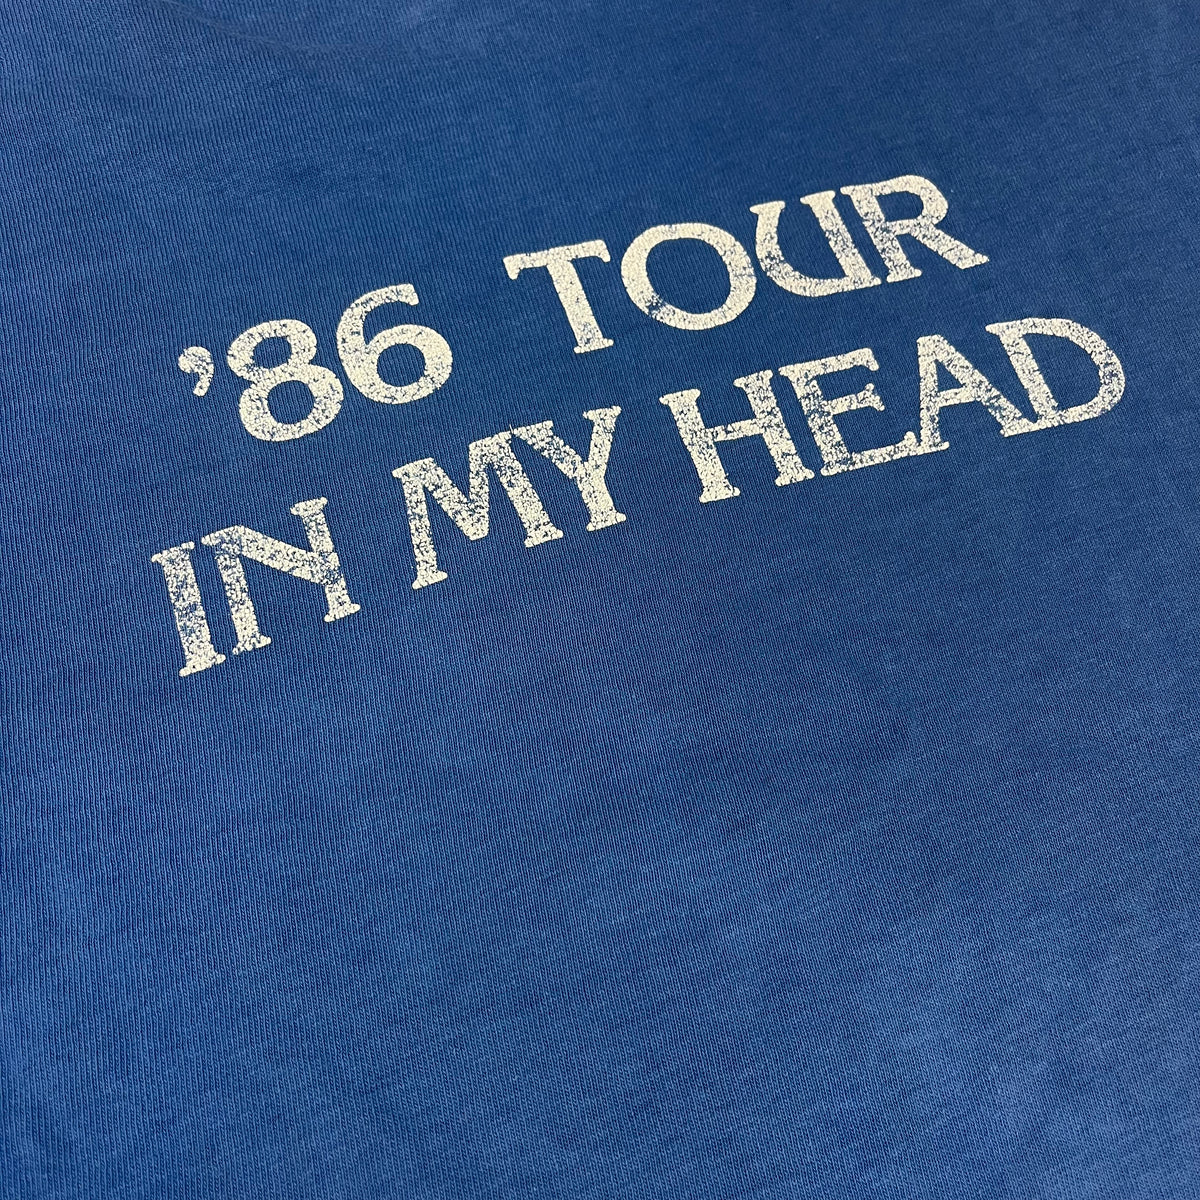 Vintage Black Flag In My Head Tour T-Shirt